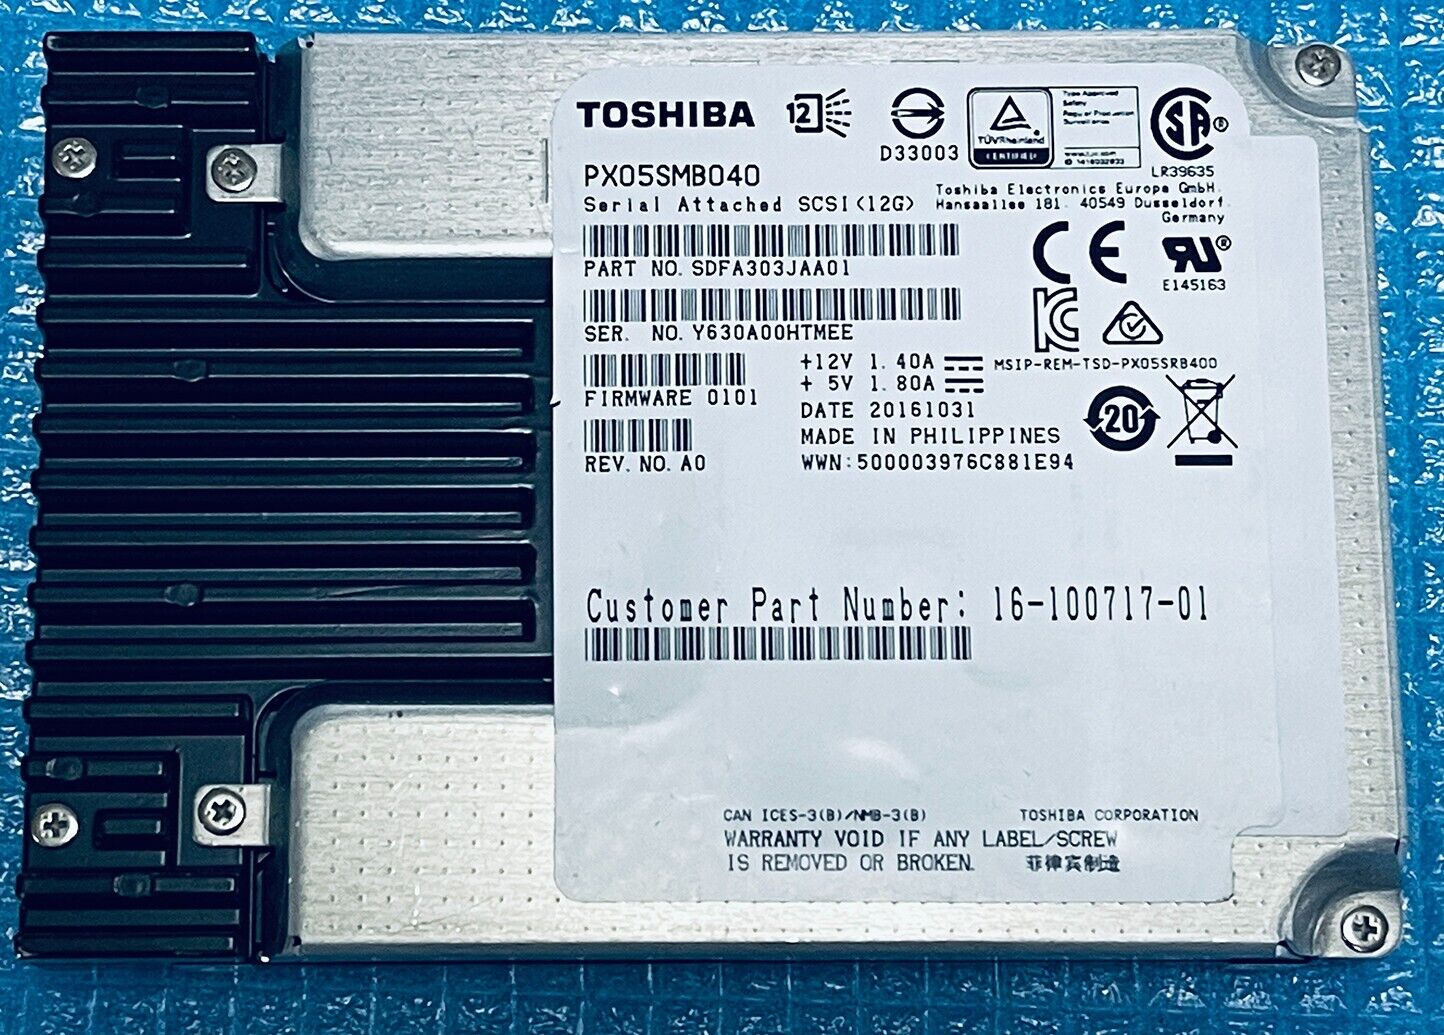 Toshiba PX05SMB040 400GB SAS SSD 2.5